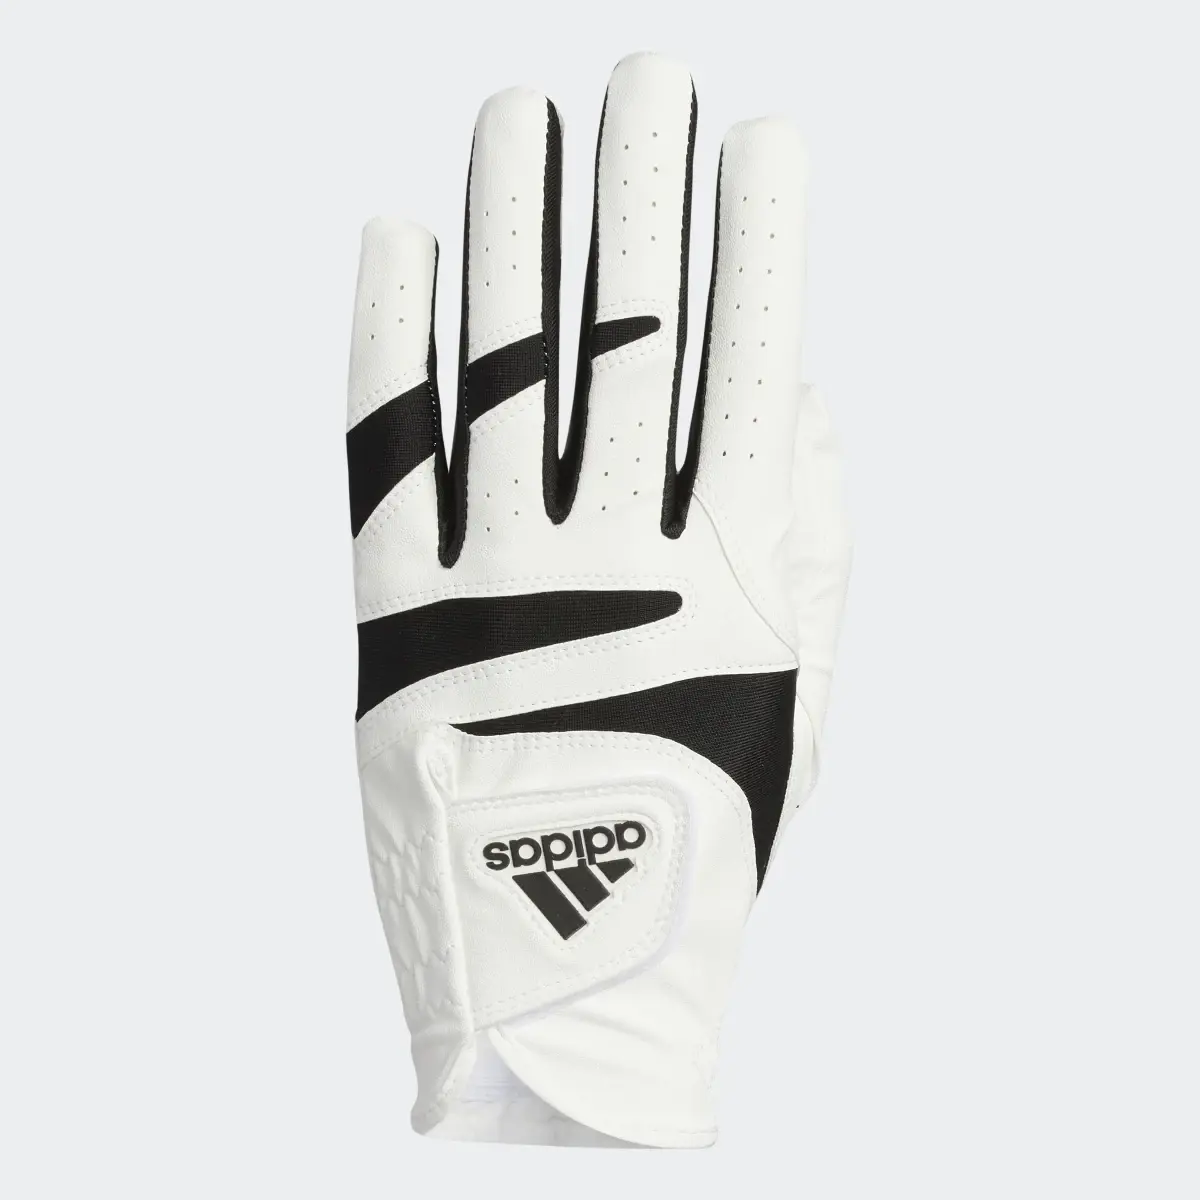 Adidas Guanto aditech 22 Glove. 2